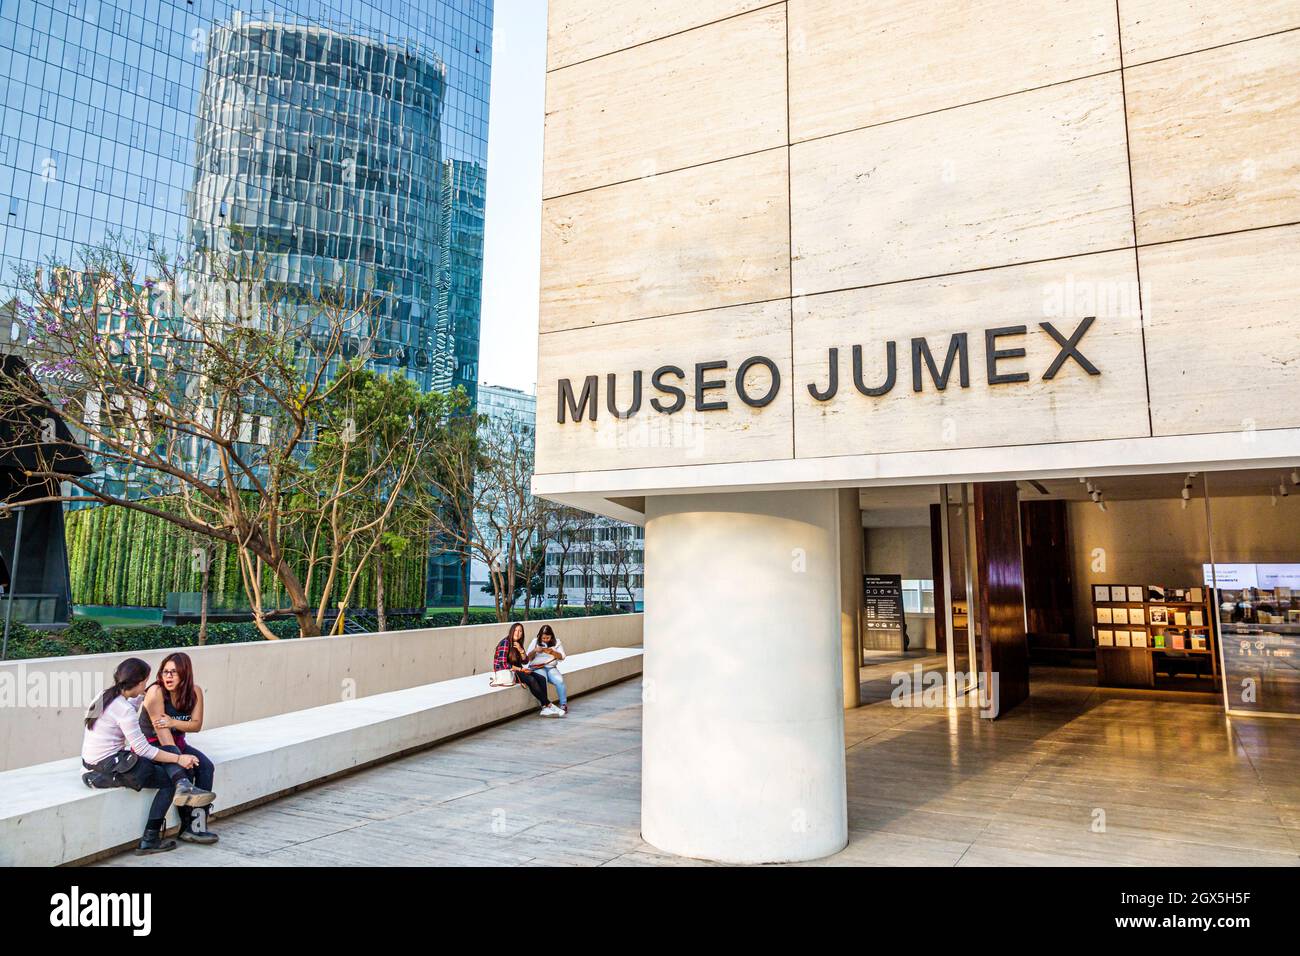 Mexiko-Stadt, hispanisch mexikanisch, Museo de Arte Moderno Jumex Art Museum Mädchen, weiblich, Teenager Teenager Teenager Freunde sitzen vor dem Eingang reden Stockfoto